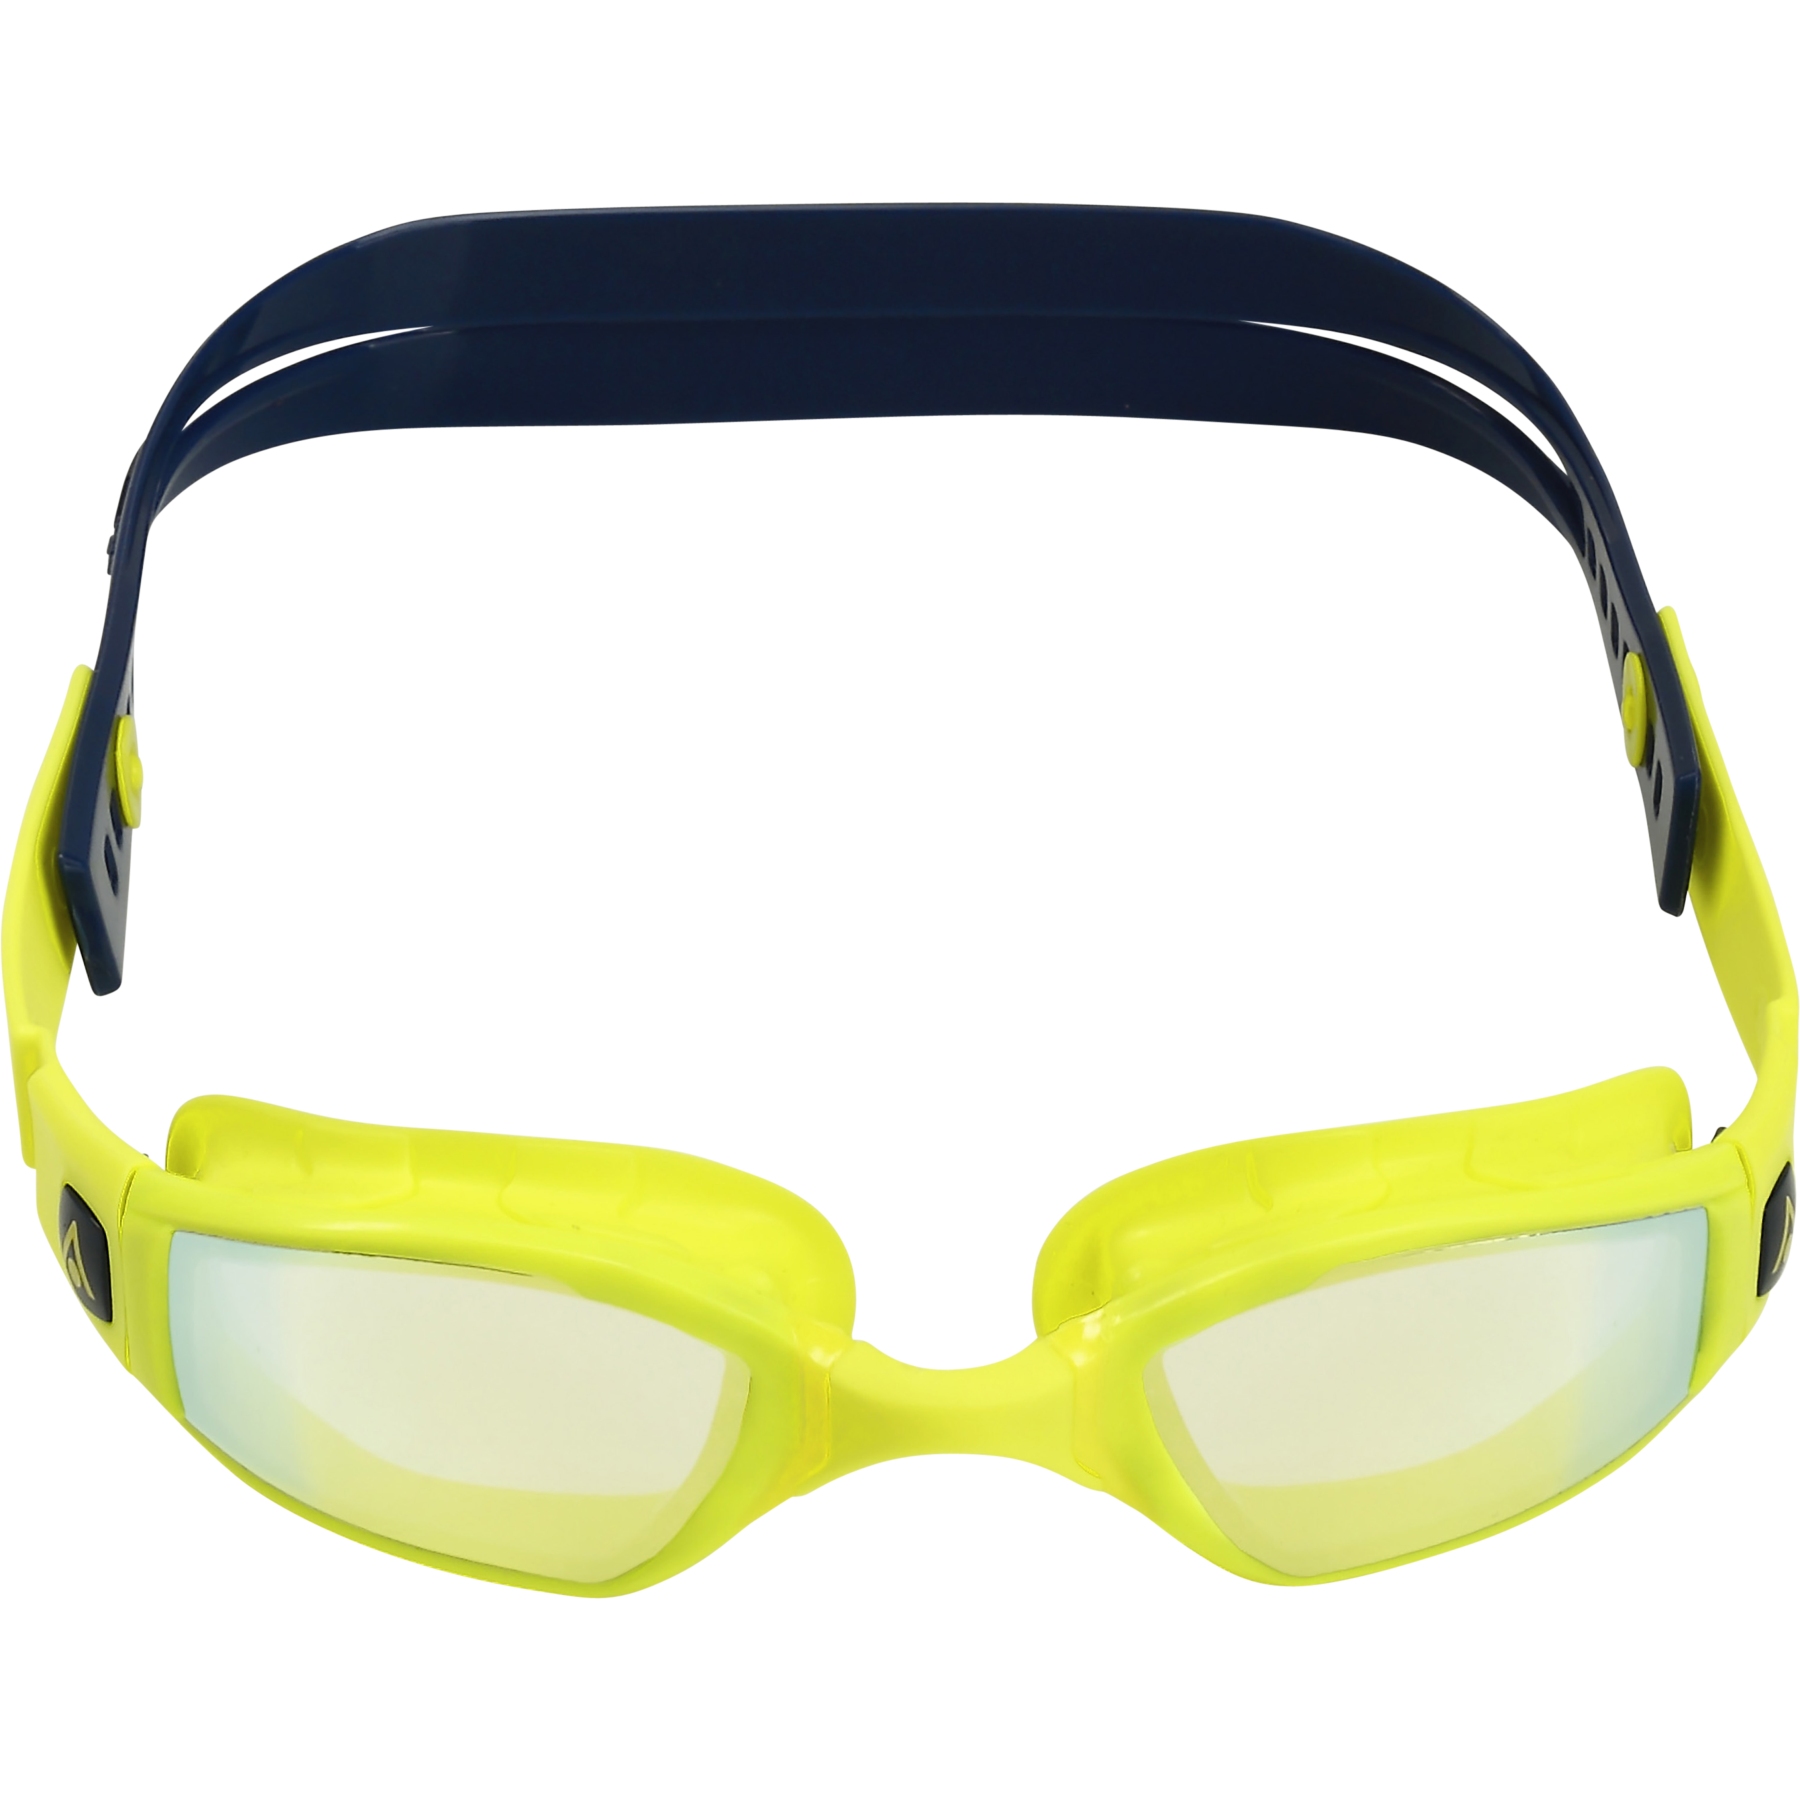 Image of AQUASPHERE Ninja.A Swim Goggles - Yellow Titanium Mirrored - Bright Yellow/Navy Blue